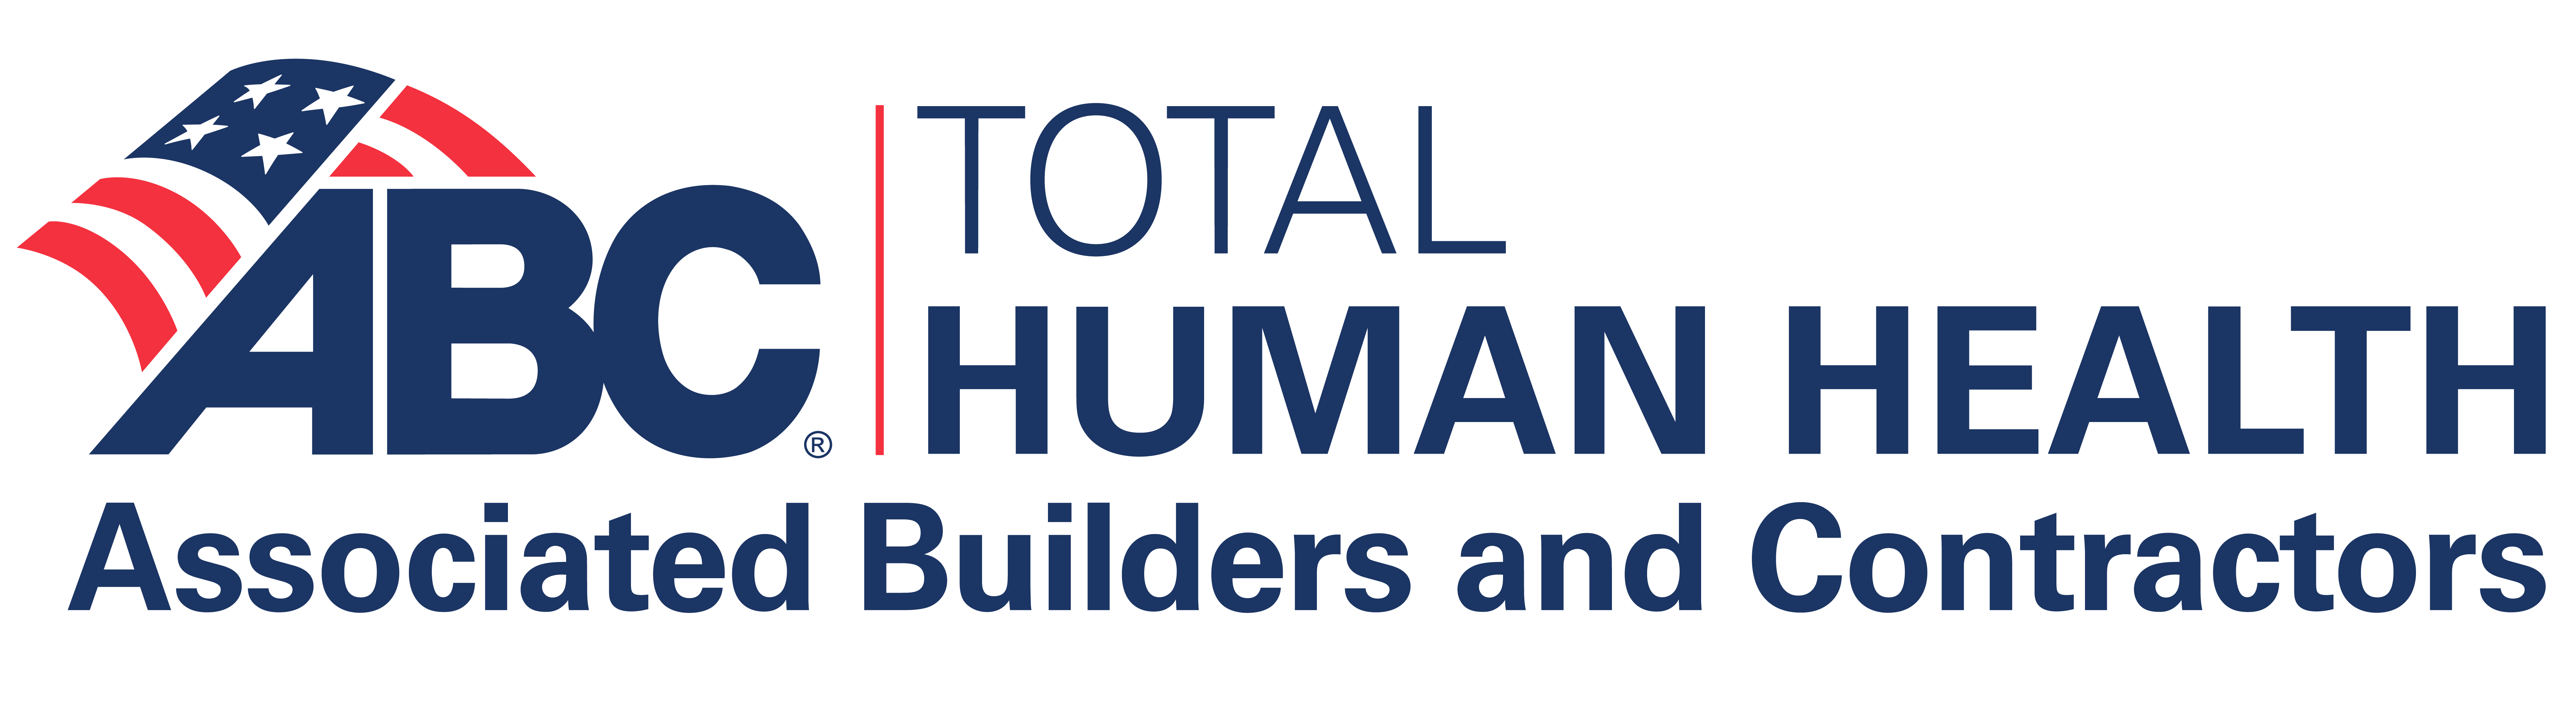 Total Human Health Logo_1_1_